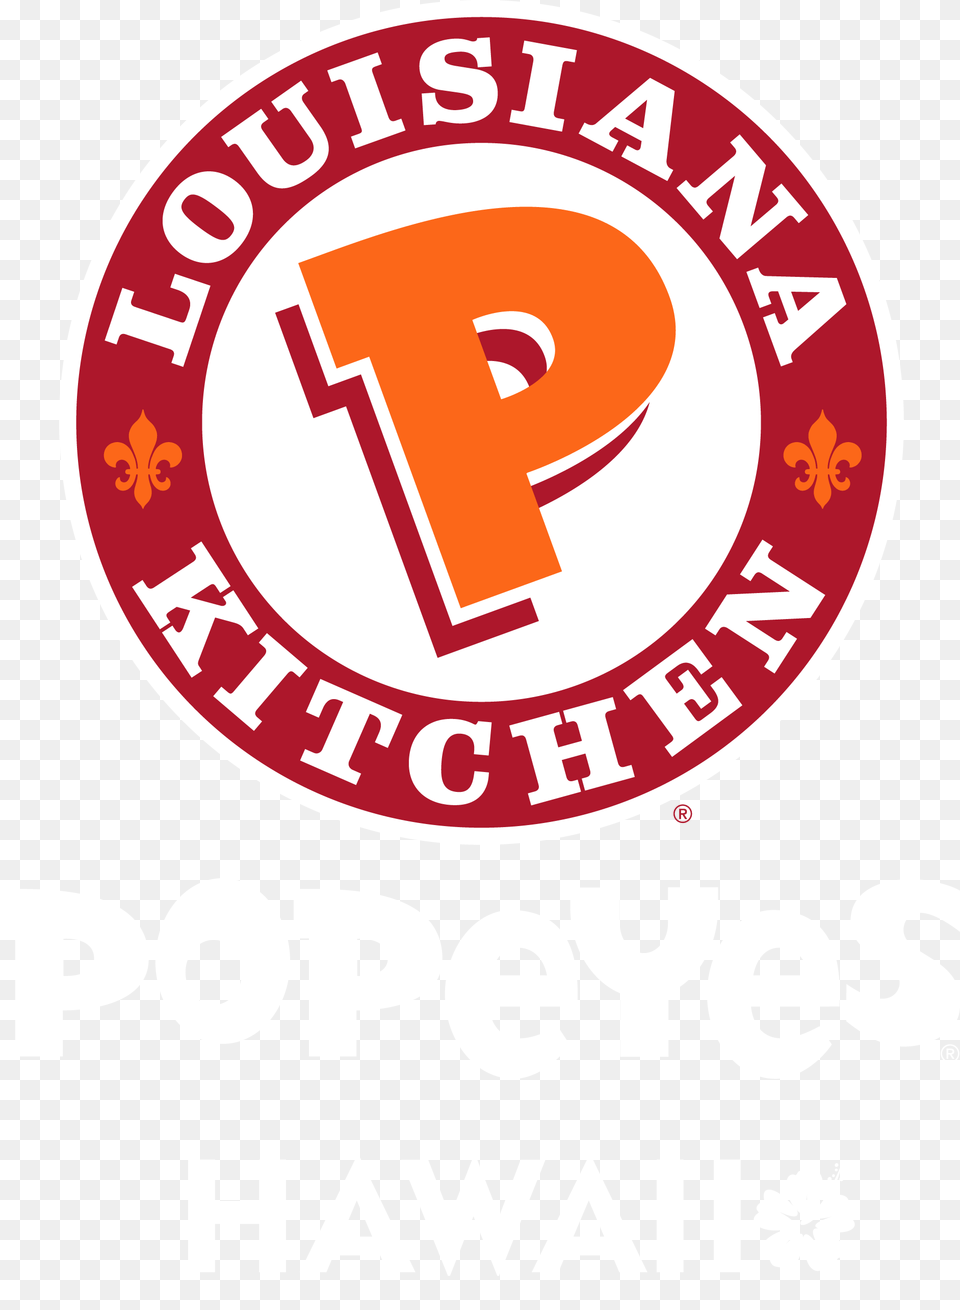 Popeyes Louisiana Kitchen Hawaii Bonafide Fried Chicken Tenders, Logo Png